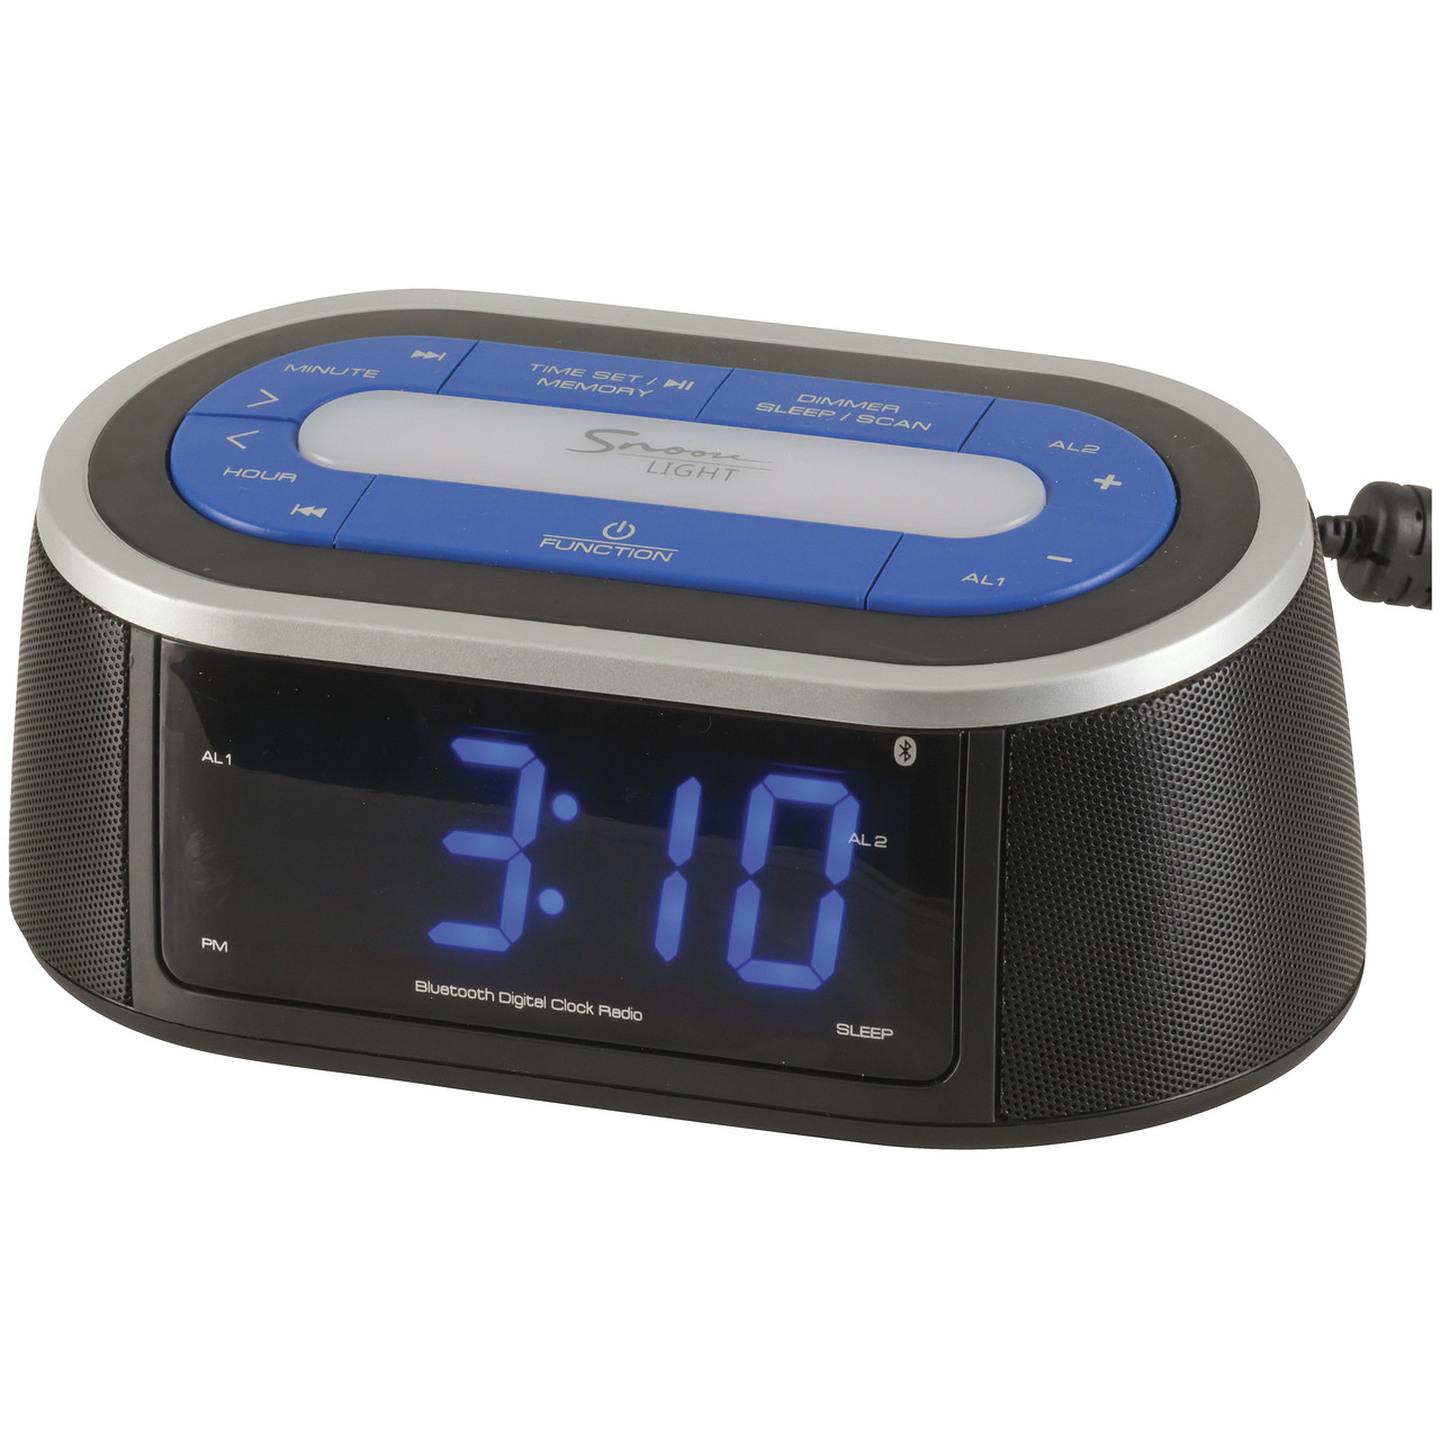 LED Clock Radio with Night Light and Bluetooth Technology